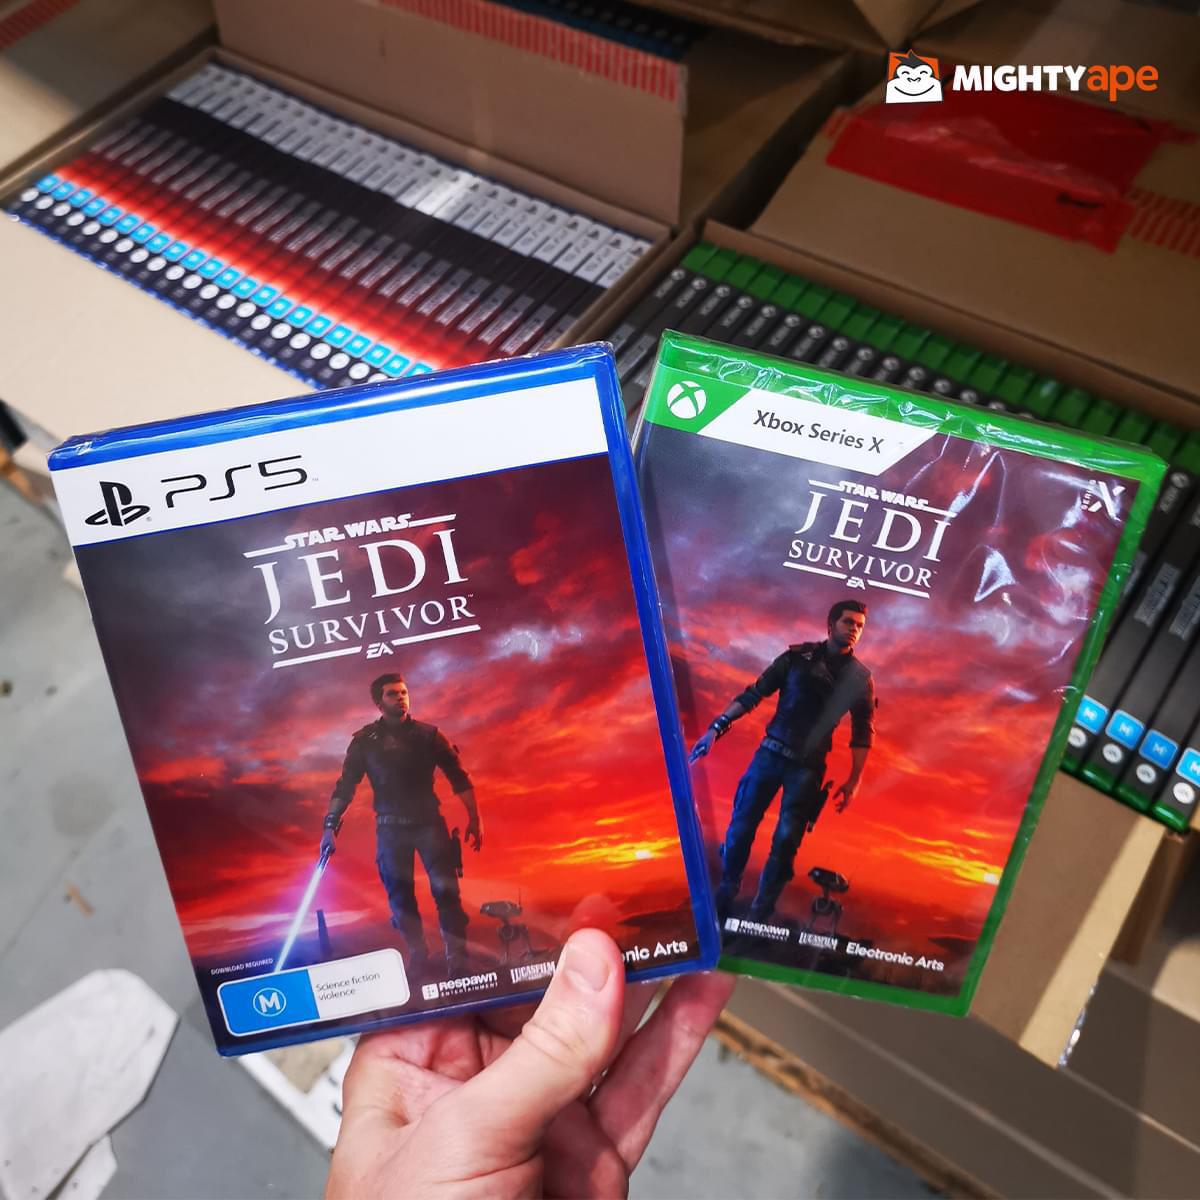 Star Wars Jedi Survivor fisik butuh download